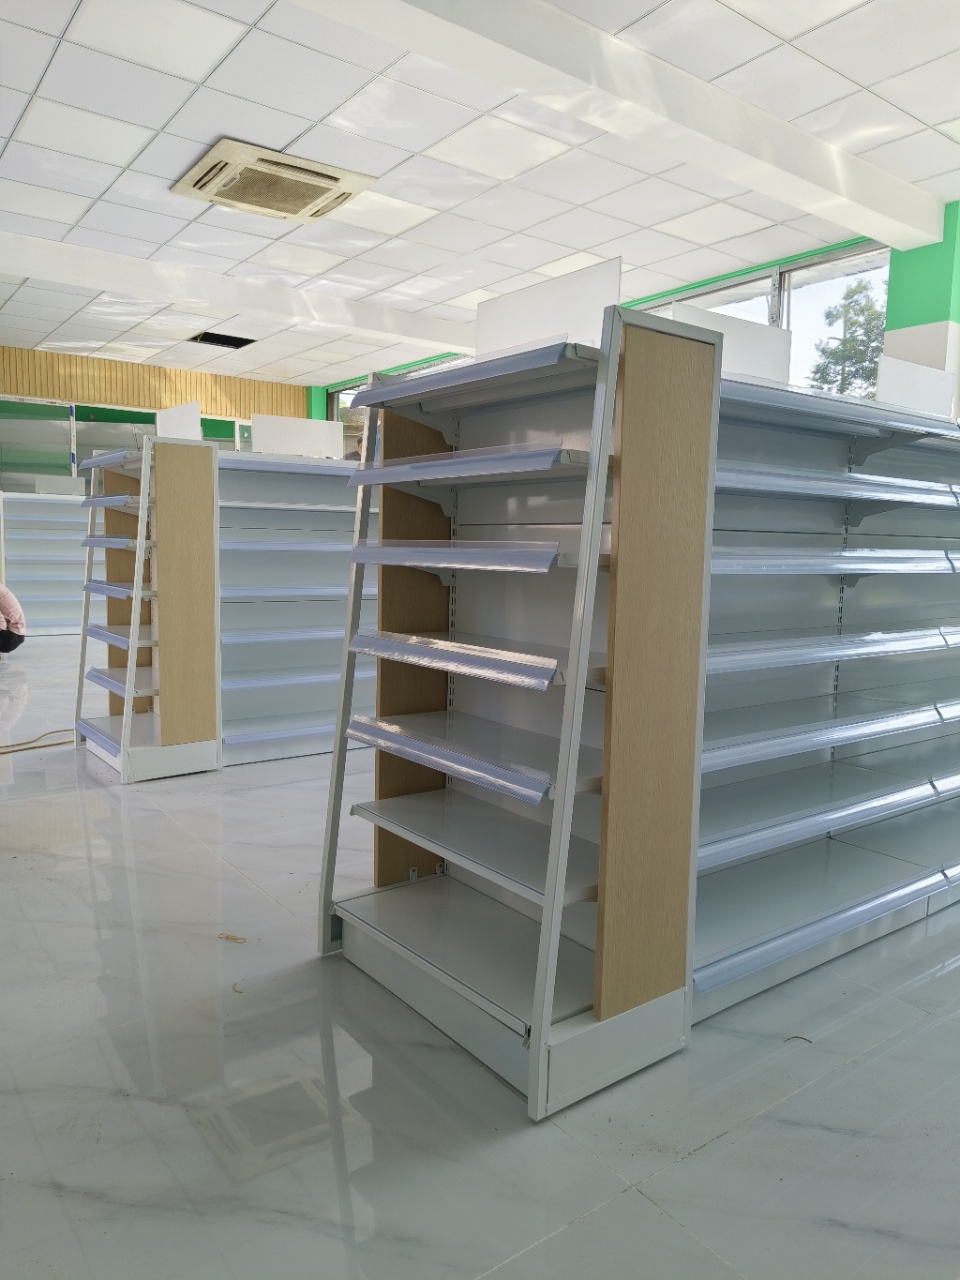 Supply of medium-sized shelves Ningbo Ningbo, Ningbo storage shelves storage shelf